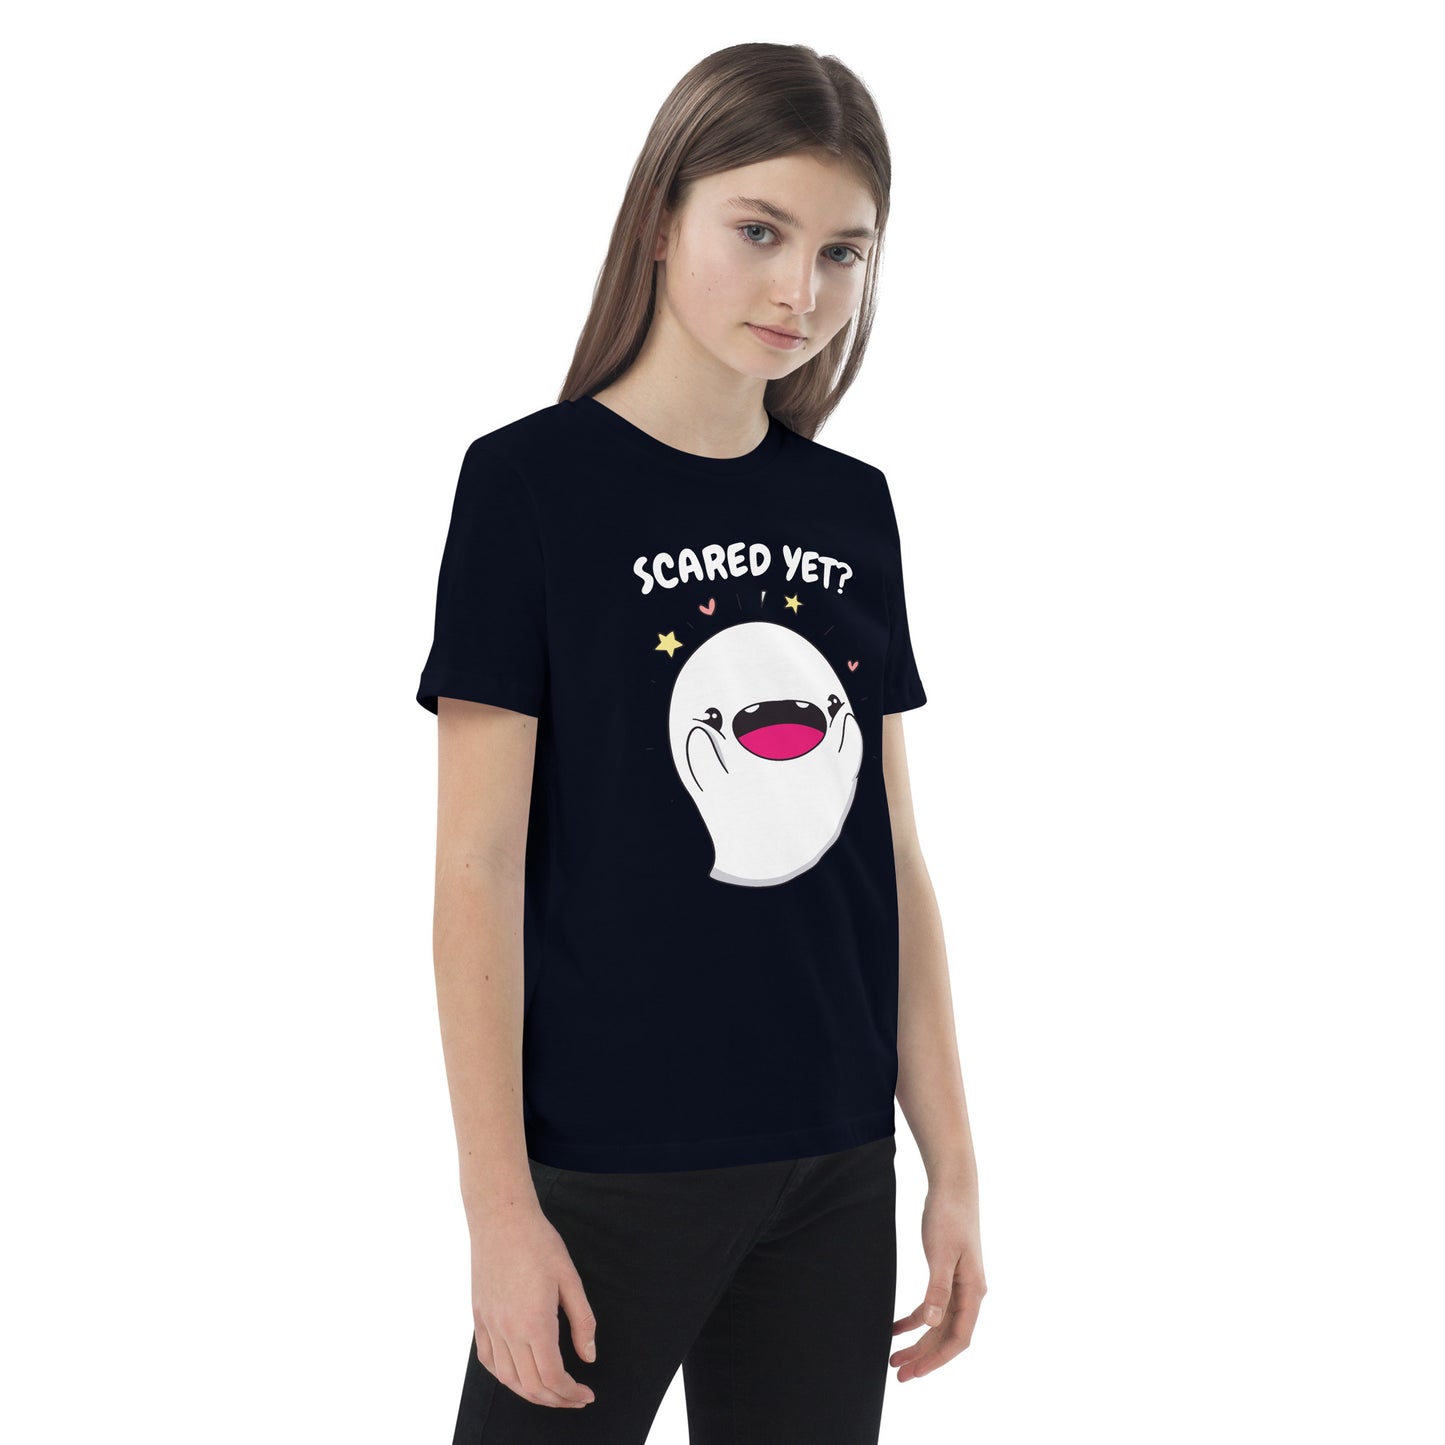 Scared yet - Organic cotton kids t-shirt